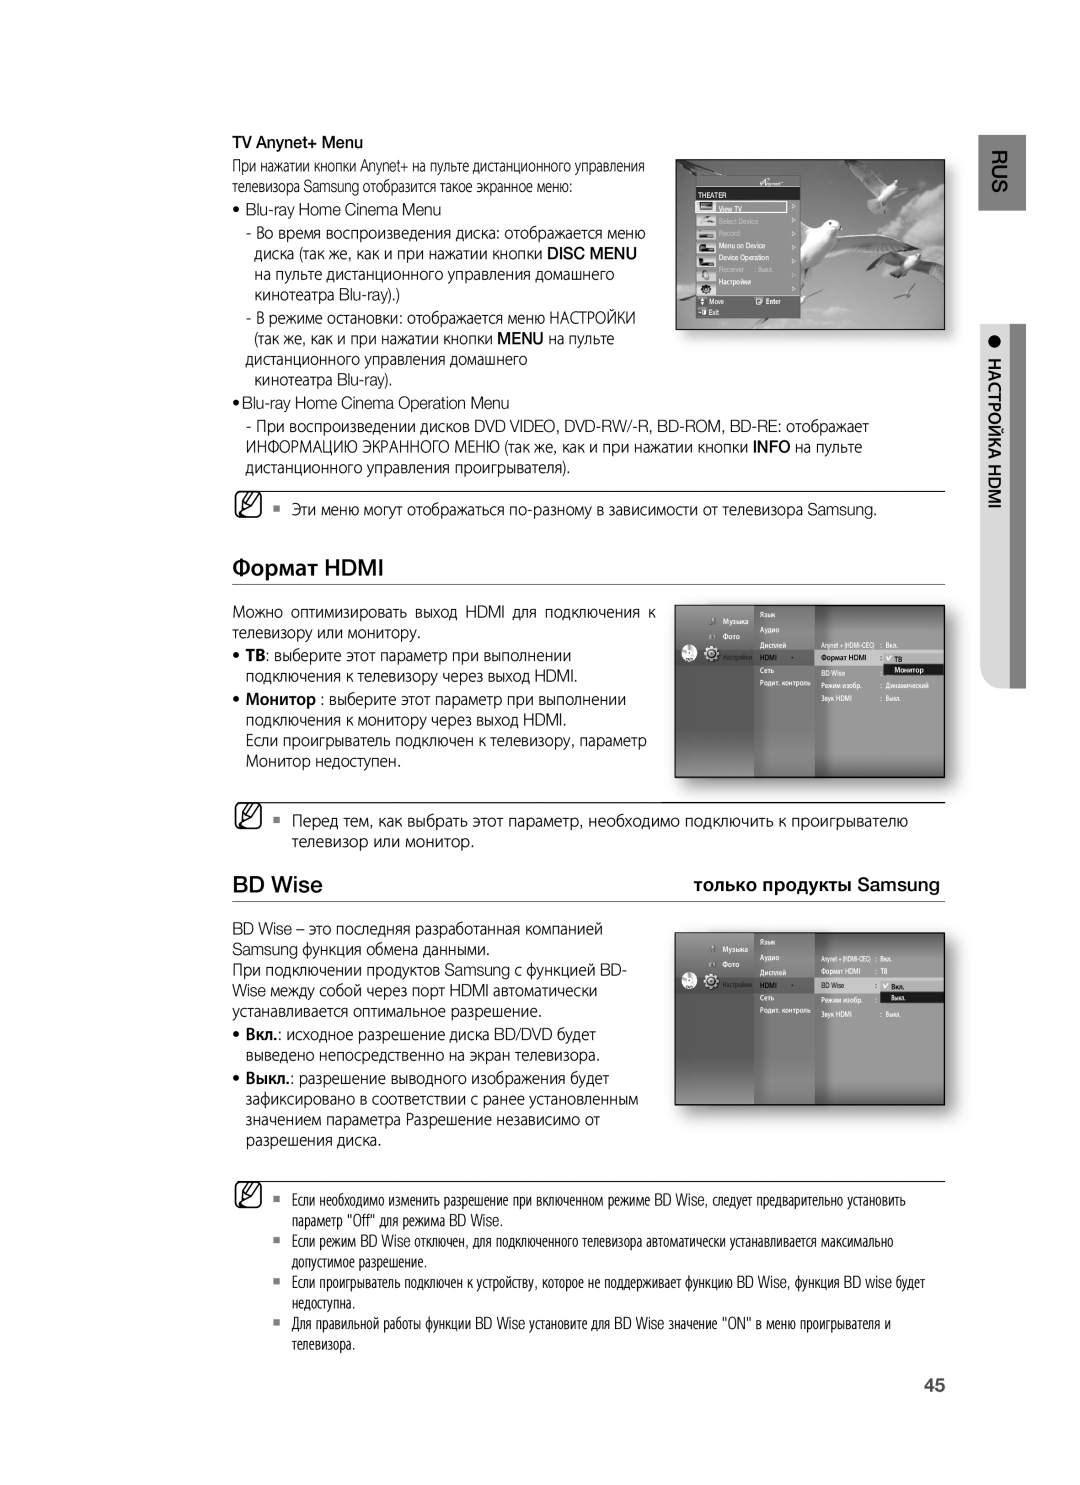 Samsung HT-BD7255R/XER manual Формат Hdmi, BD Wise, Телевизору или монитору, ТВ выберите этот параметр при выполнении 